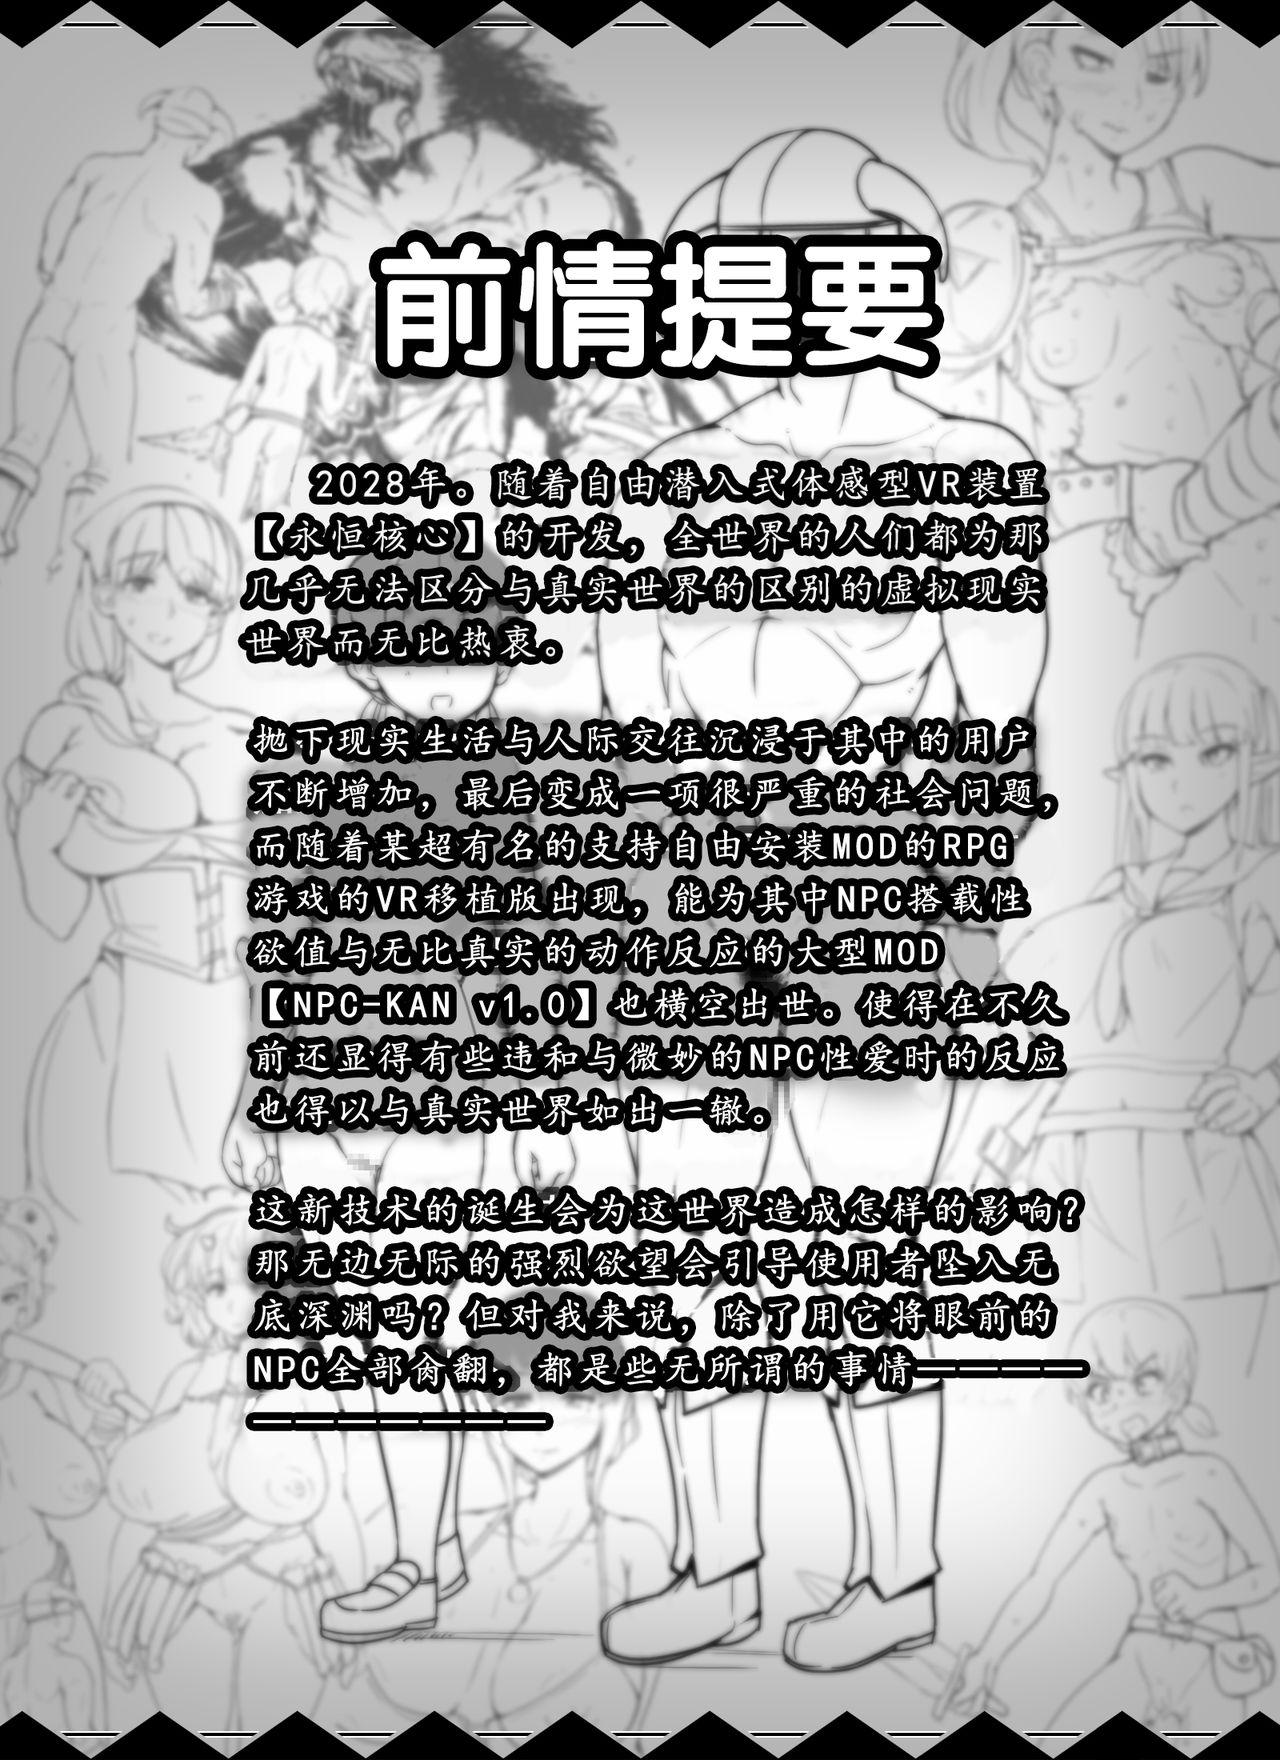 Foda NPC Kan MOD - The elder scrolls Show - Page 3